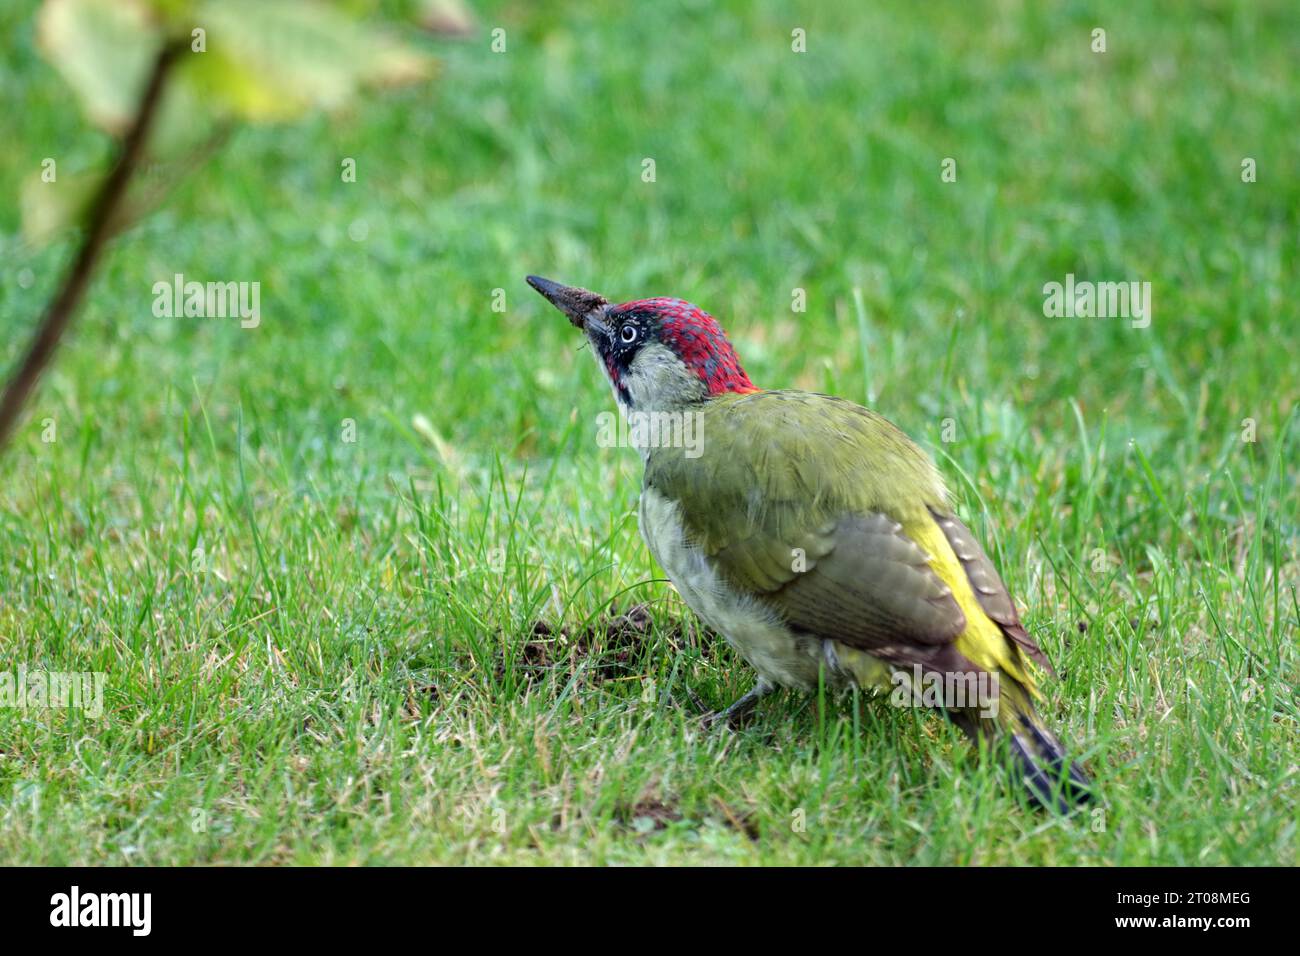 European green woodpecker (Picus viridis), male, bird, plumage, green, beak, lawn, Germany, The green woodpecker is sitting on the lawn, on its beak Stock Photo